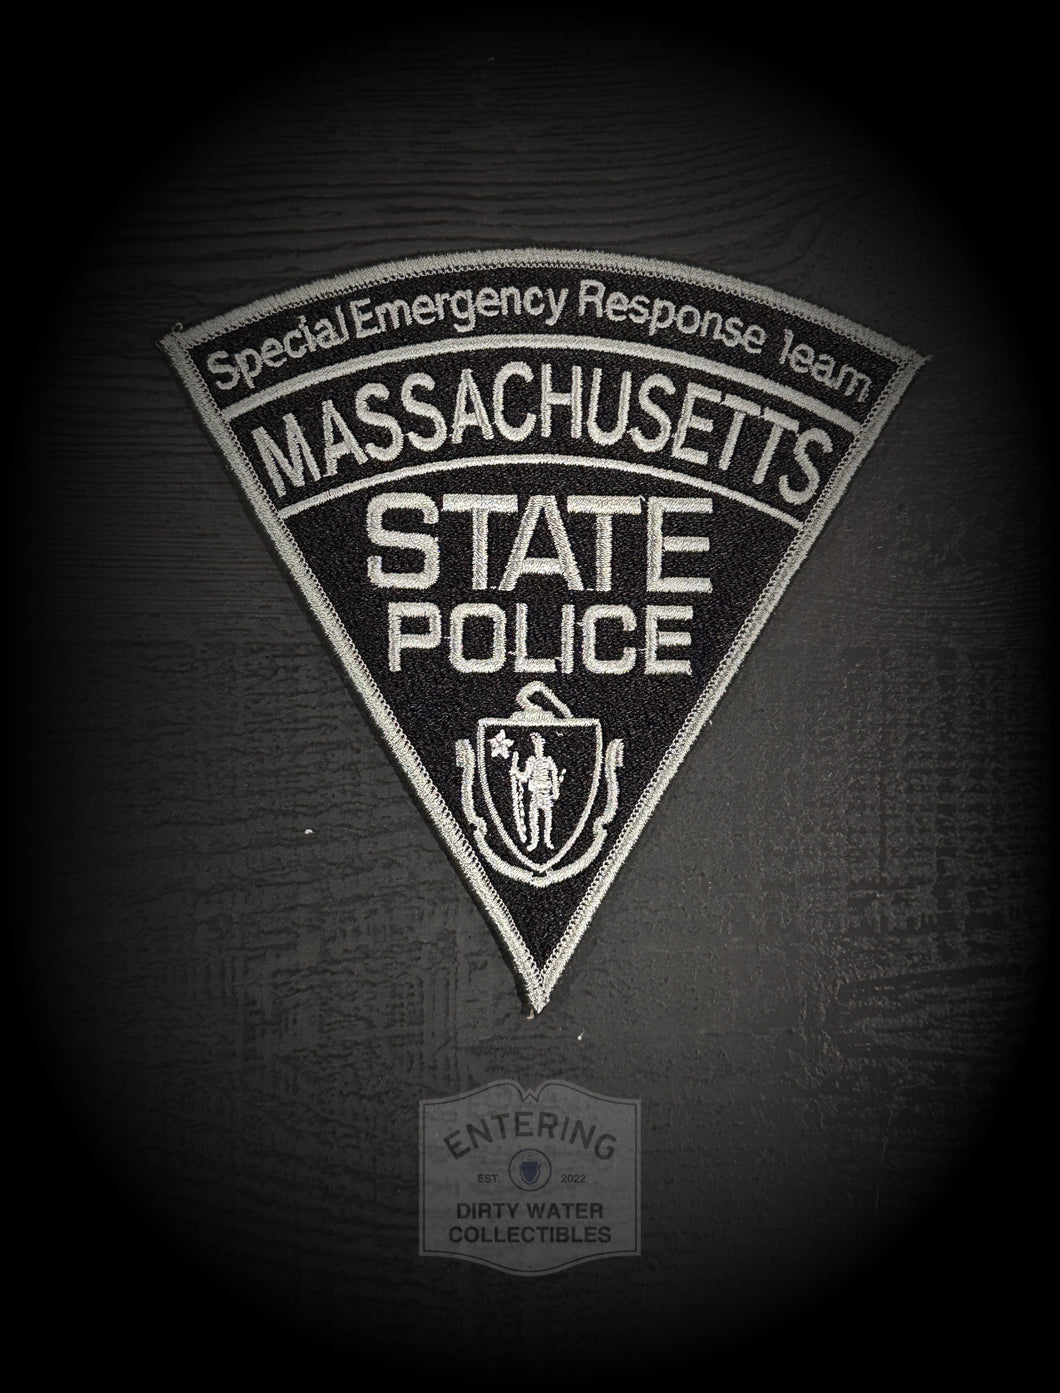 Massachusetts State Police SERT team patch